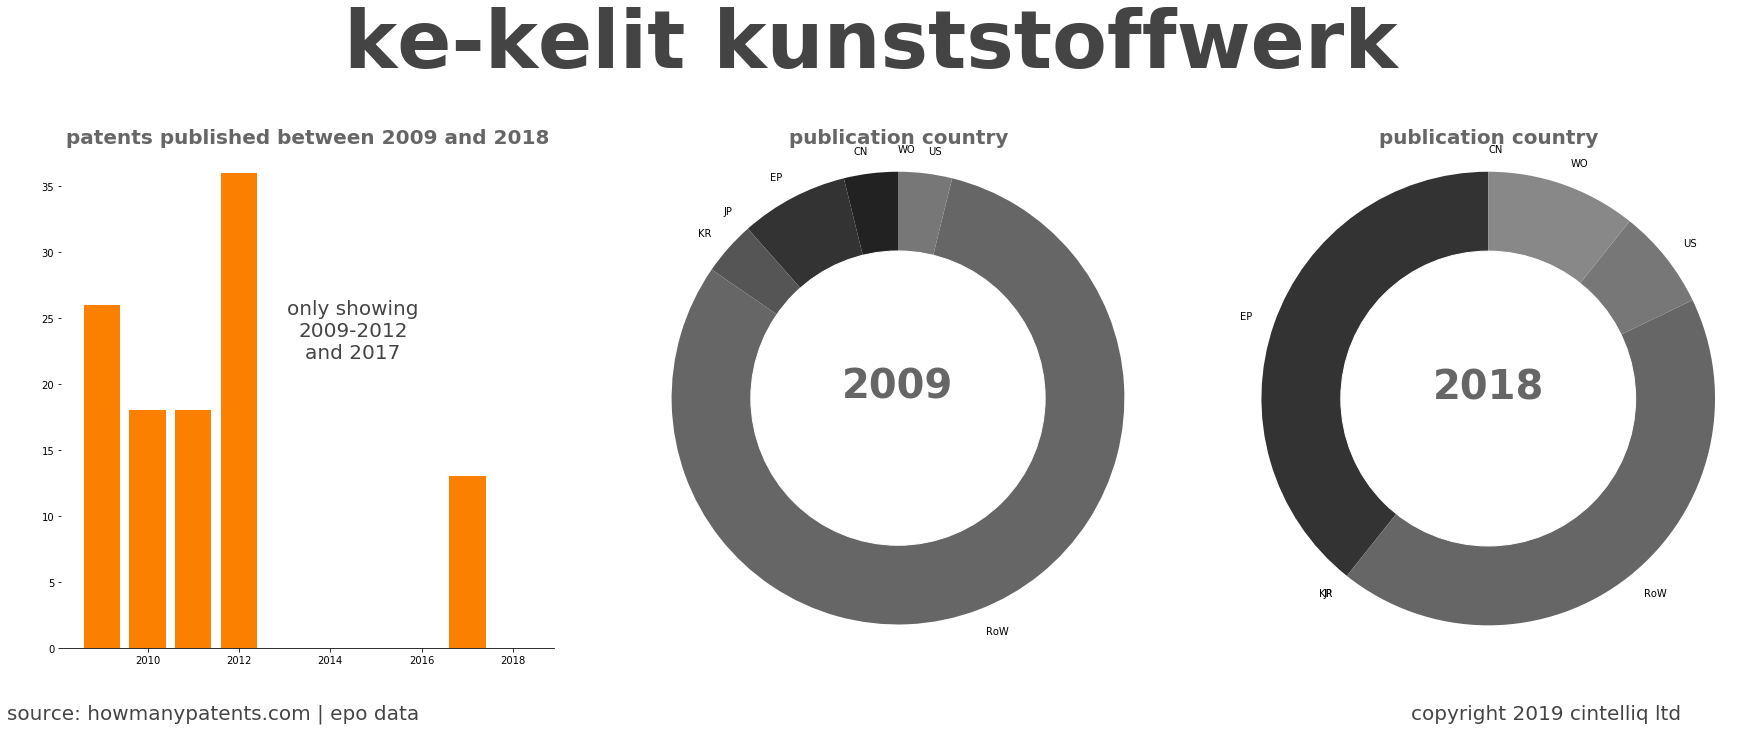 summary of patents for Ke-Kelit Kunststoffwerk